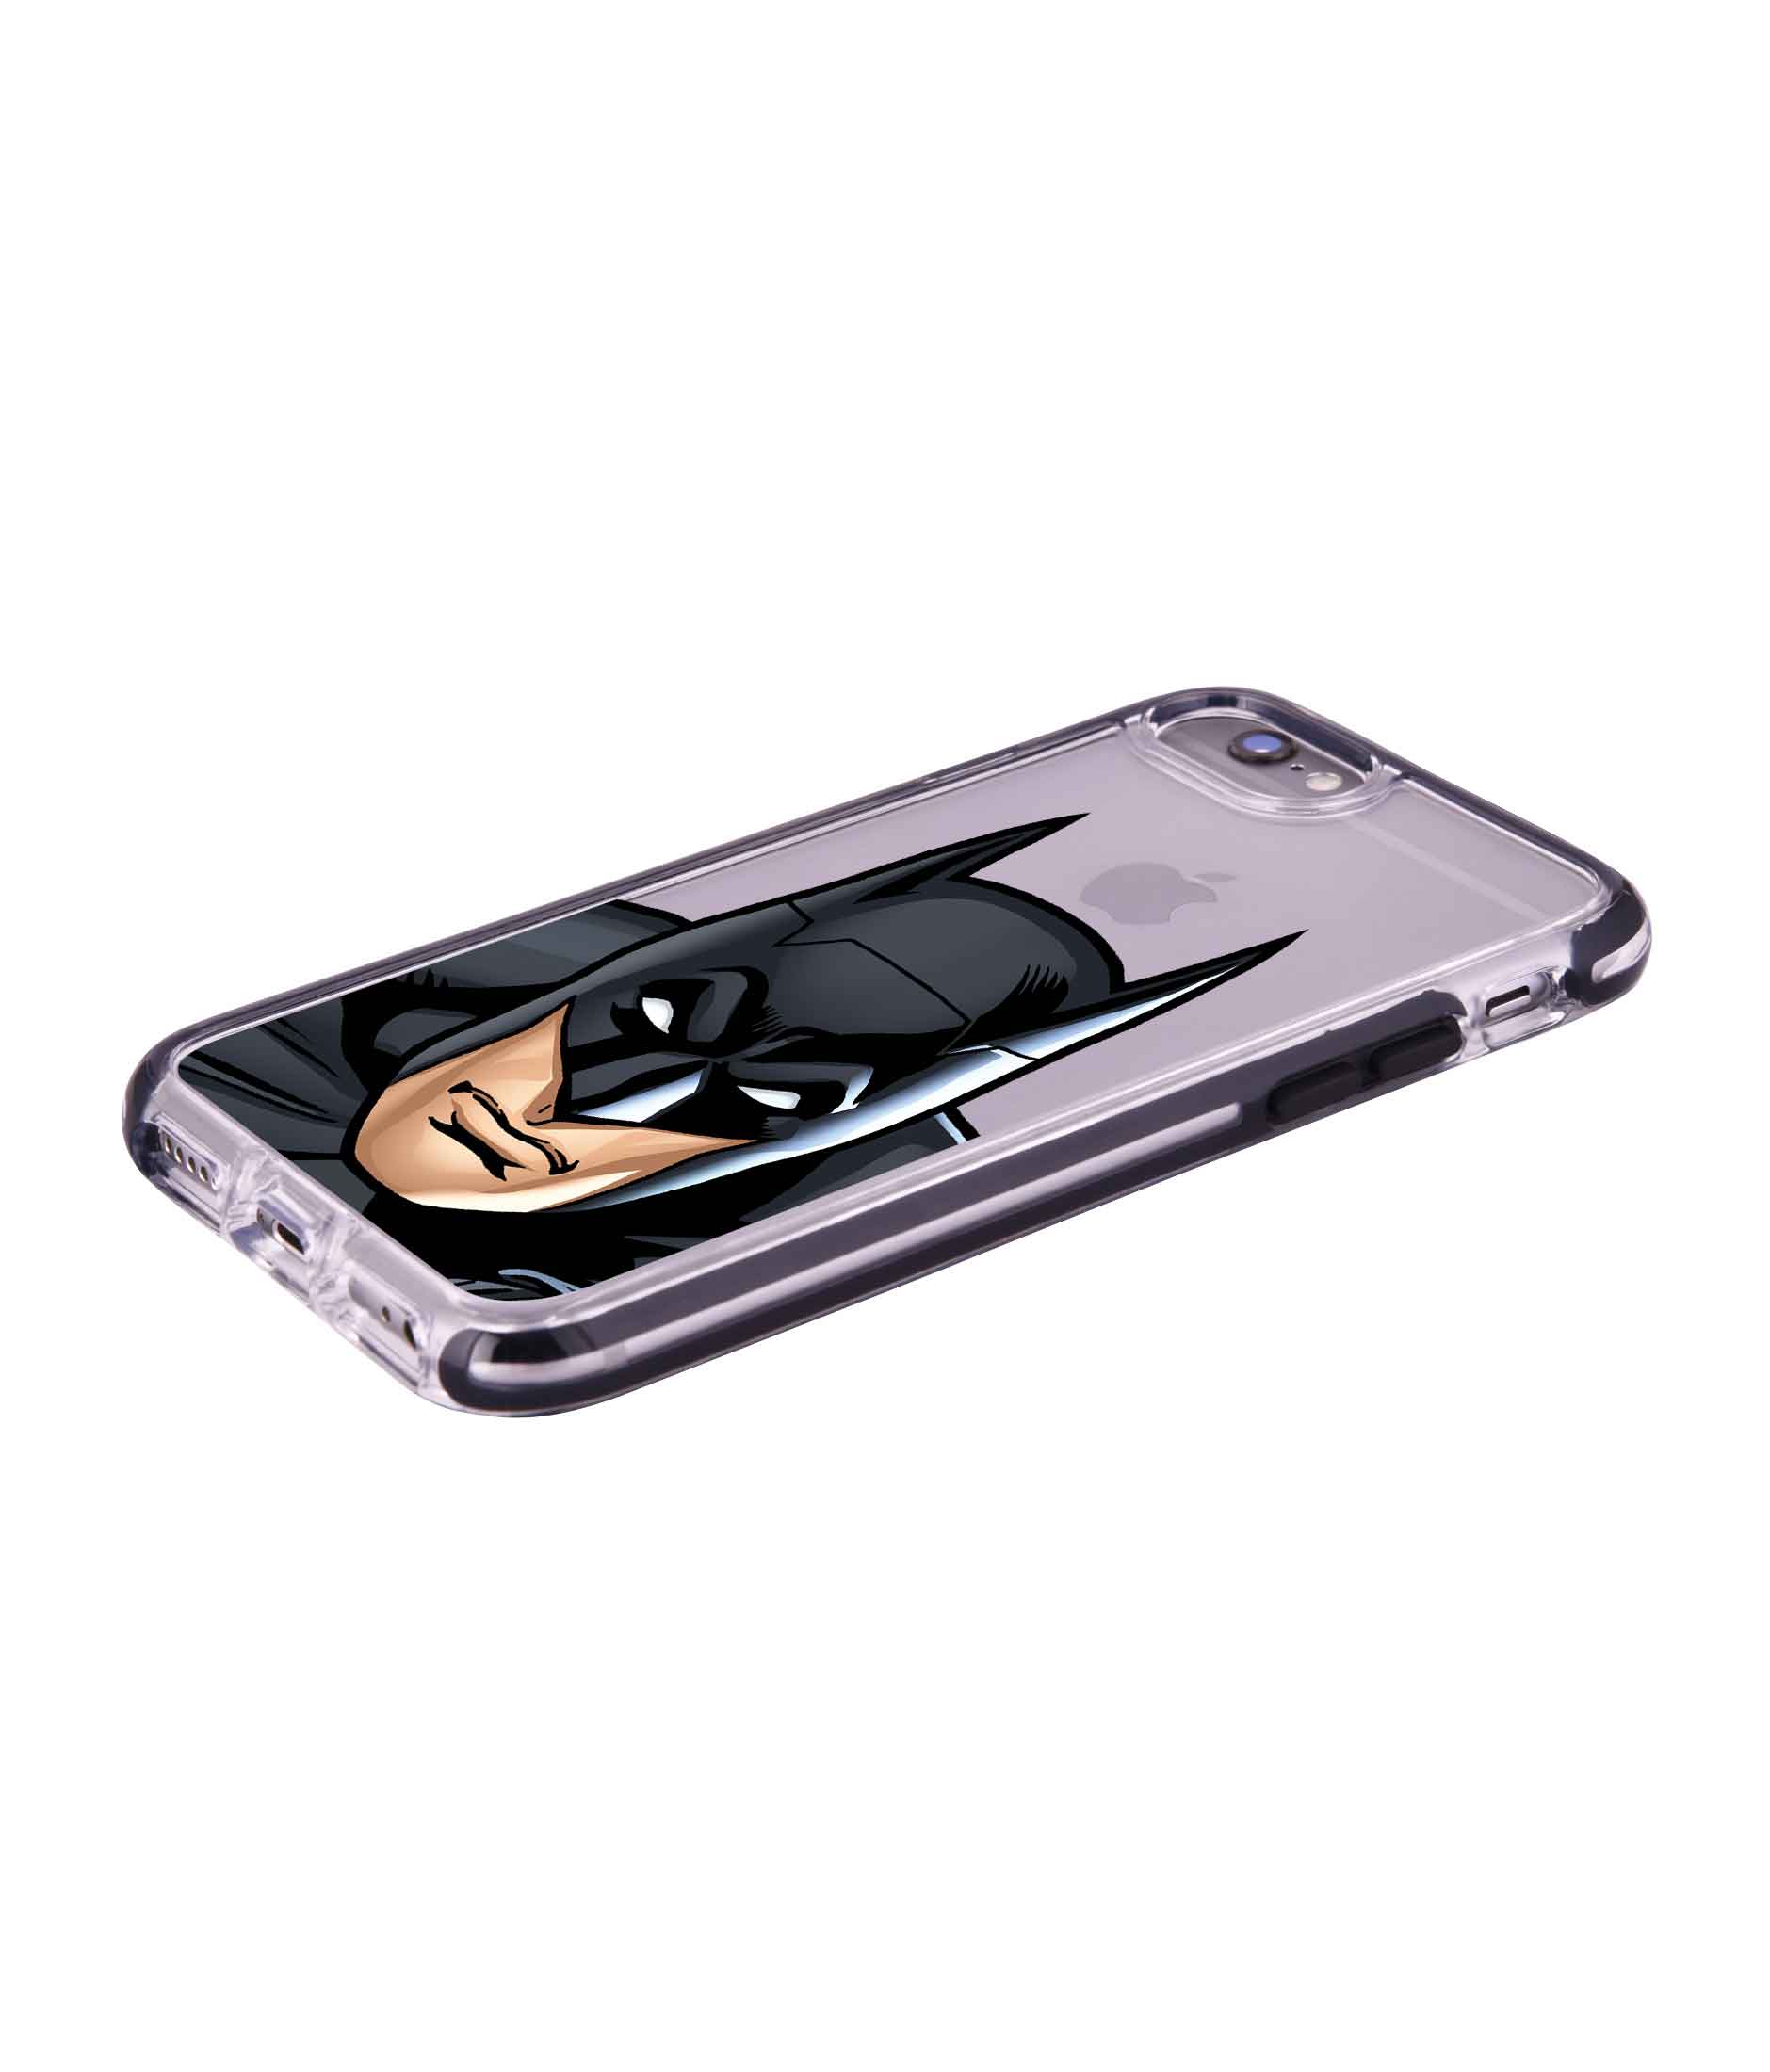 Fierce Batman - Extreme Phone Case for iPhone 6